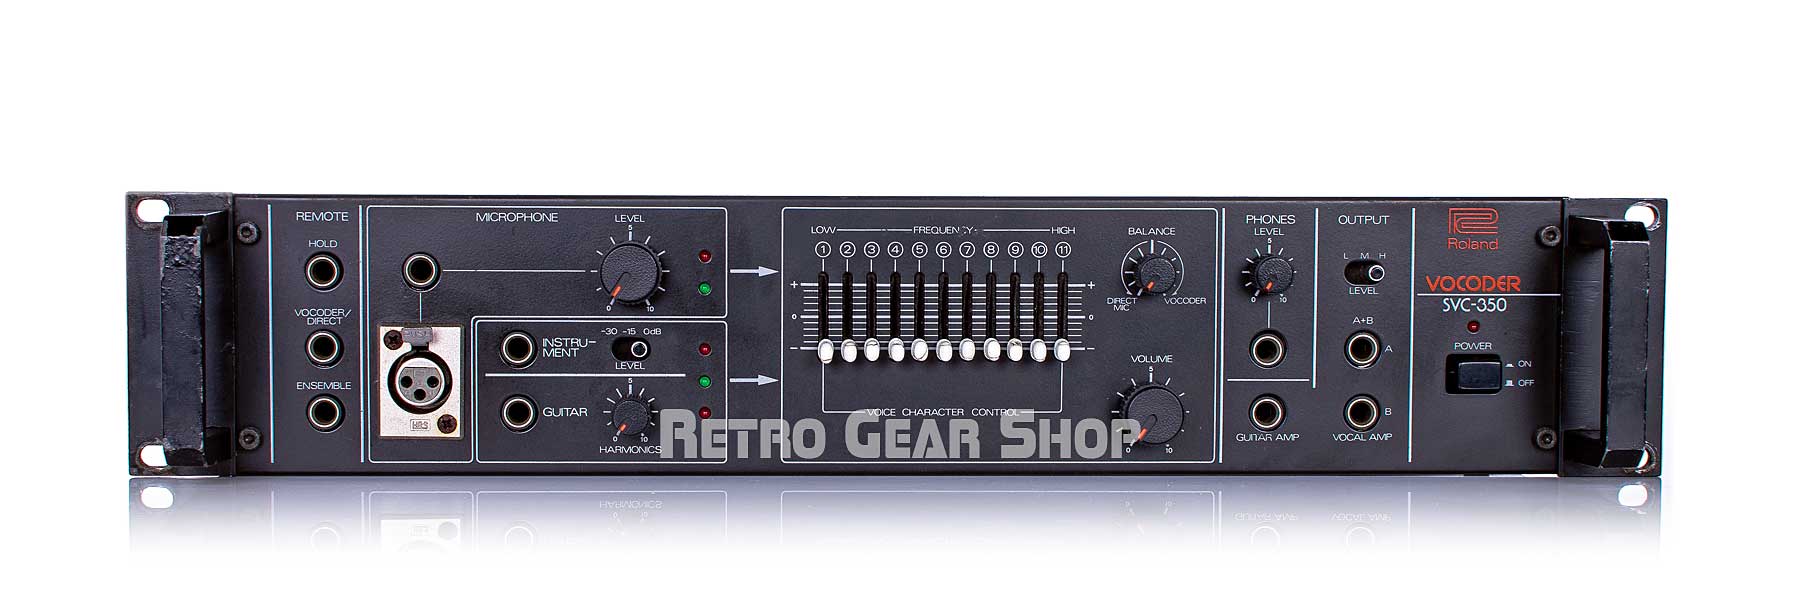 Roland SVC-350 Vocoder Vintage Rare Analog Synthesizer Synth